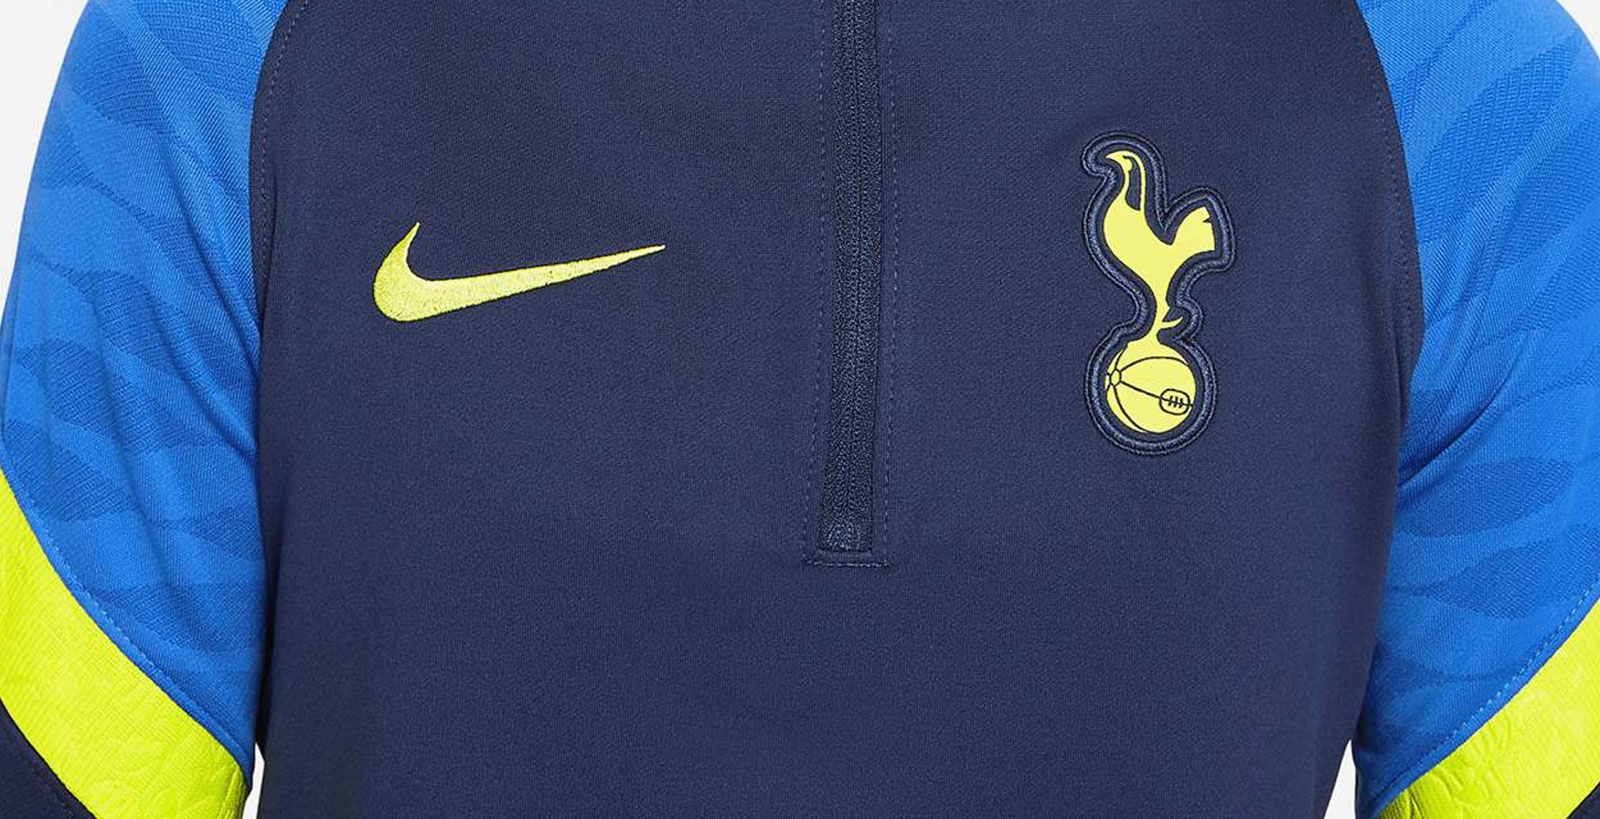 dubbellaag Sinis Buitenboordmotor Nike Tottenham 2021-2022 Training Kit Leaked - Footy Headlines